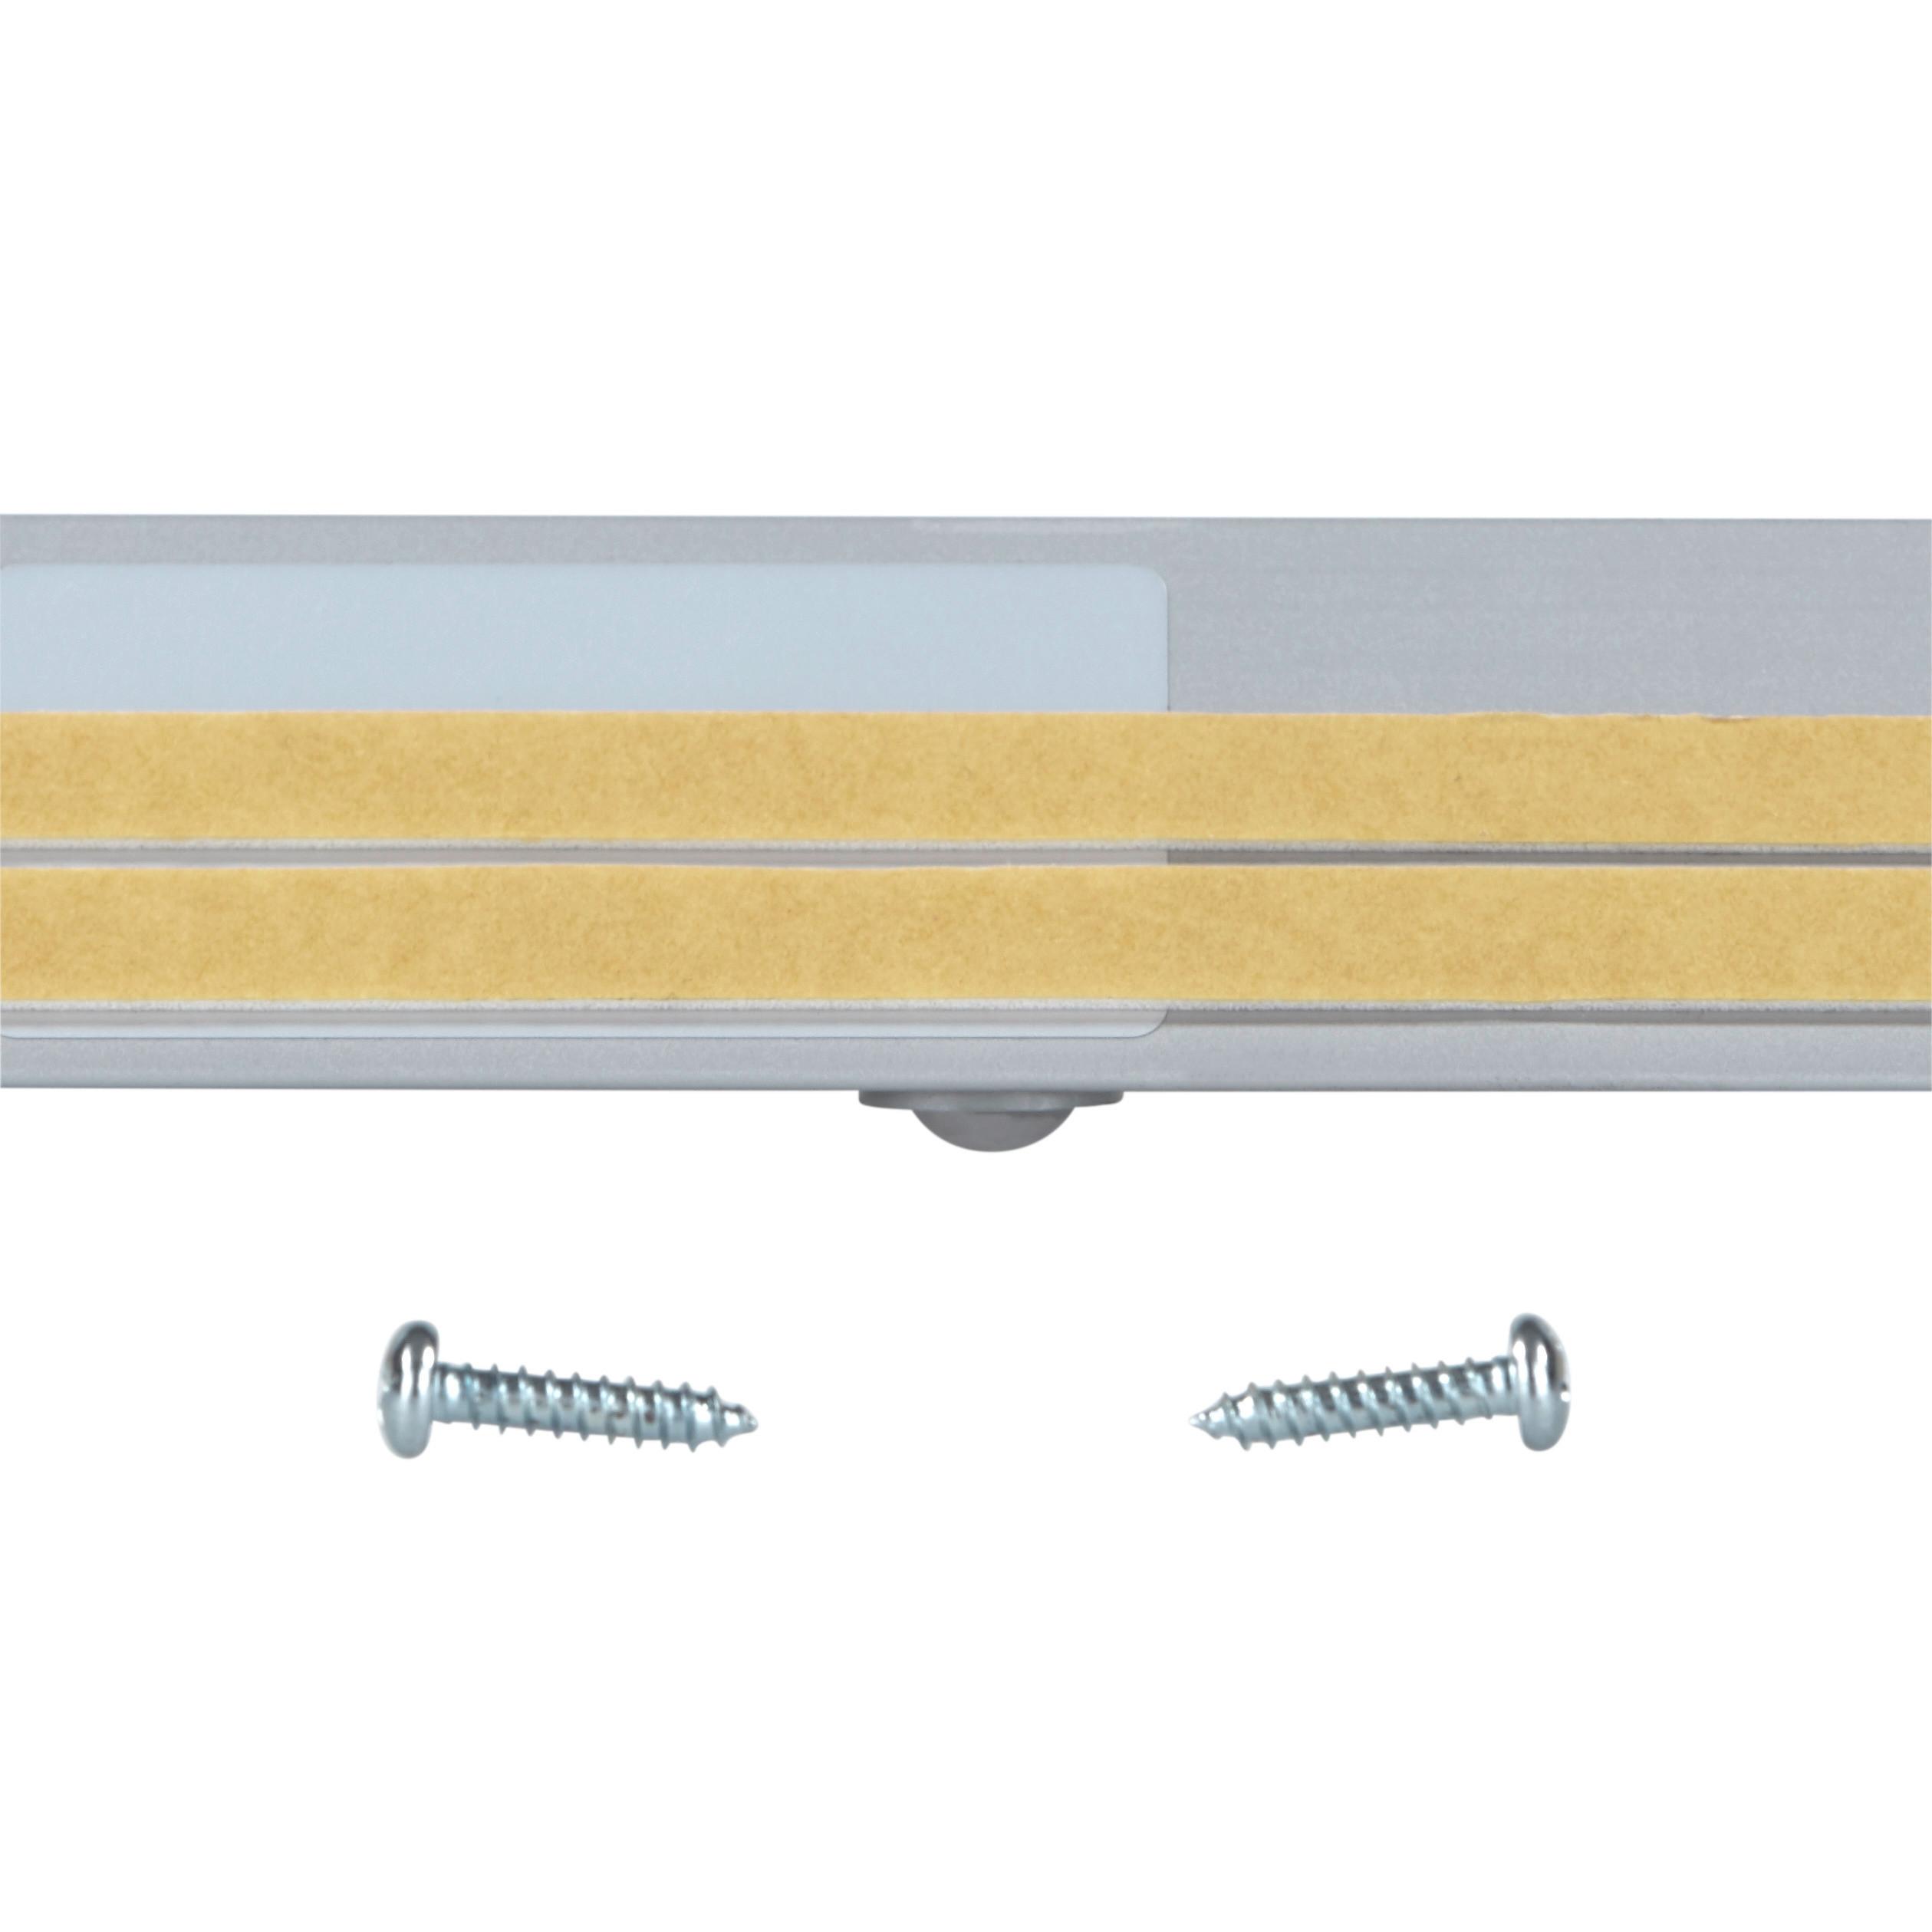 Regalbodenbeleuchtung Unit Led -Leiste 1,9 W Bewegungsmelder - MODERN, Kunststoff/Metall (42cm) - Ondega